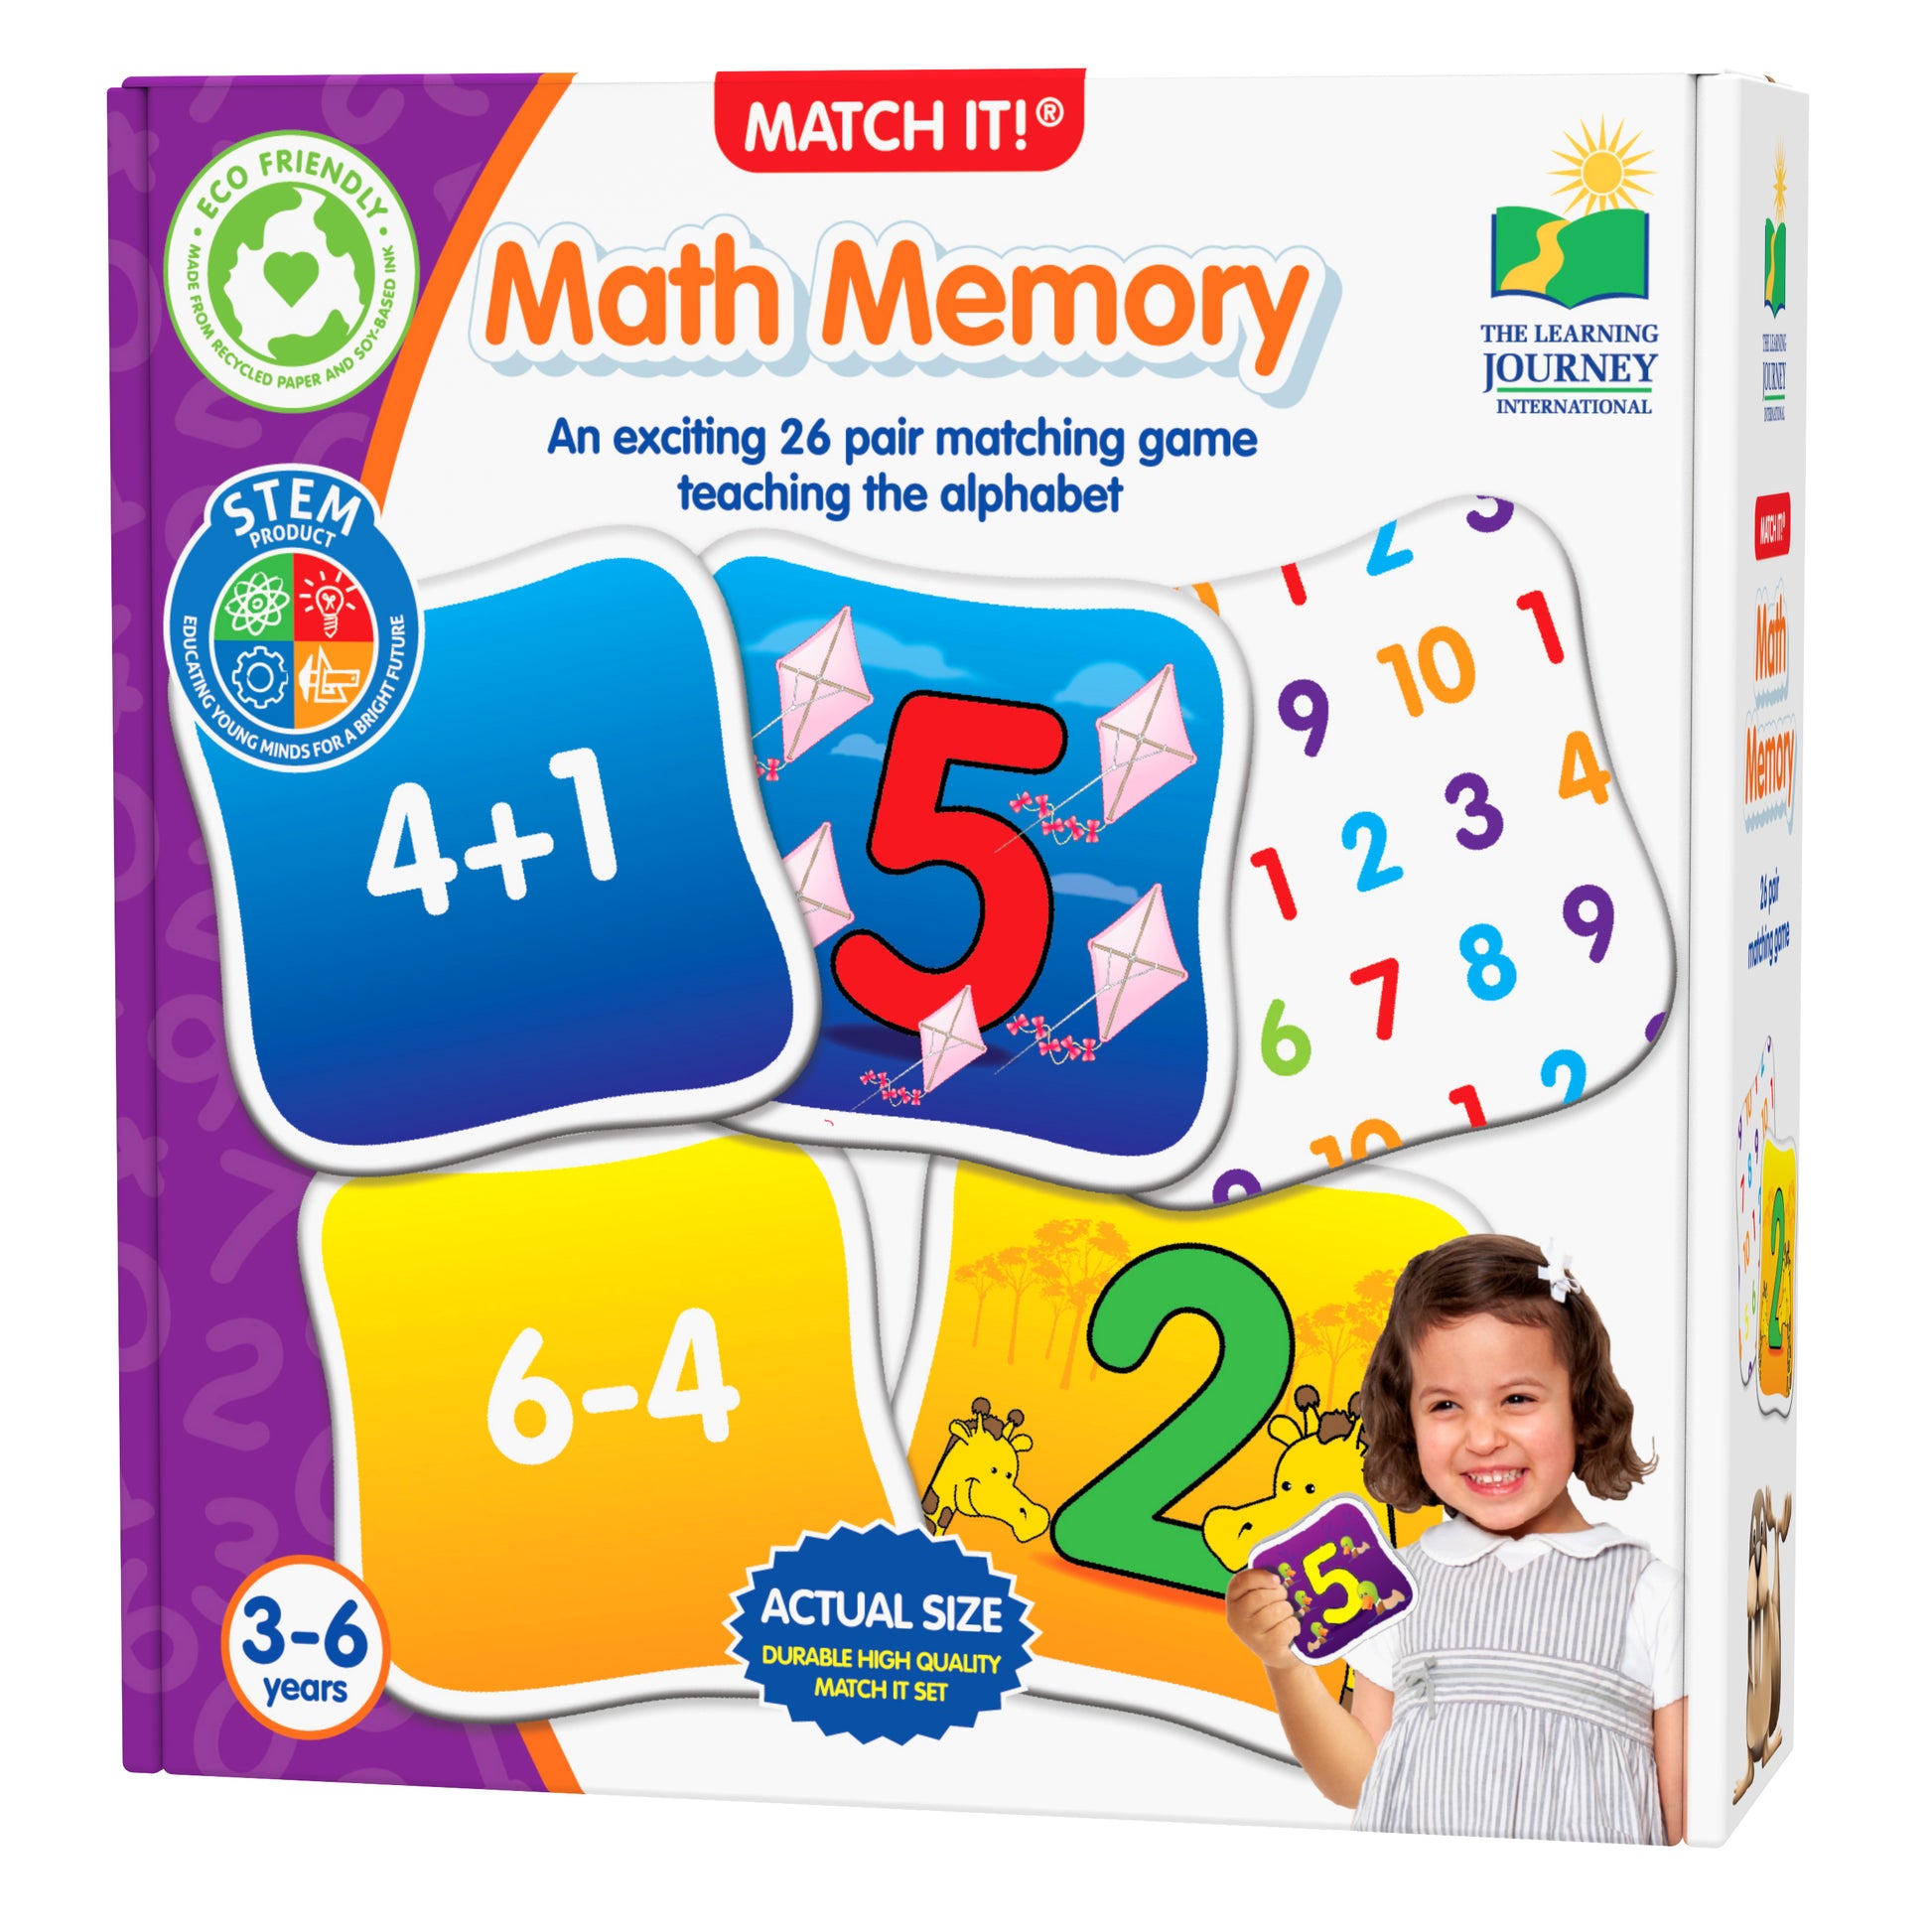 Match It - Math Memory packaging